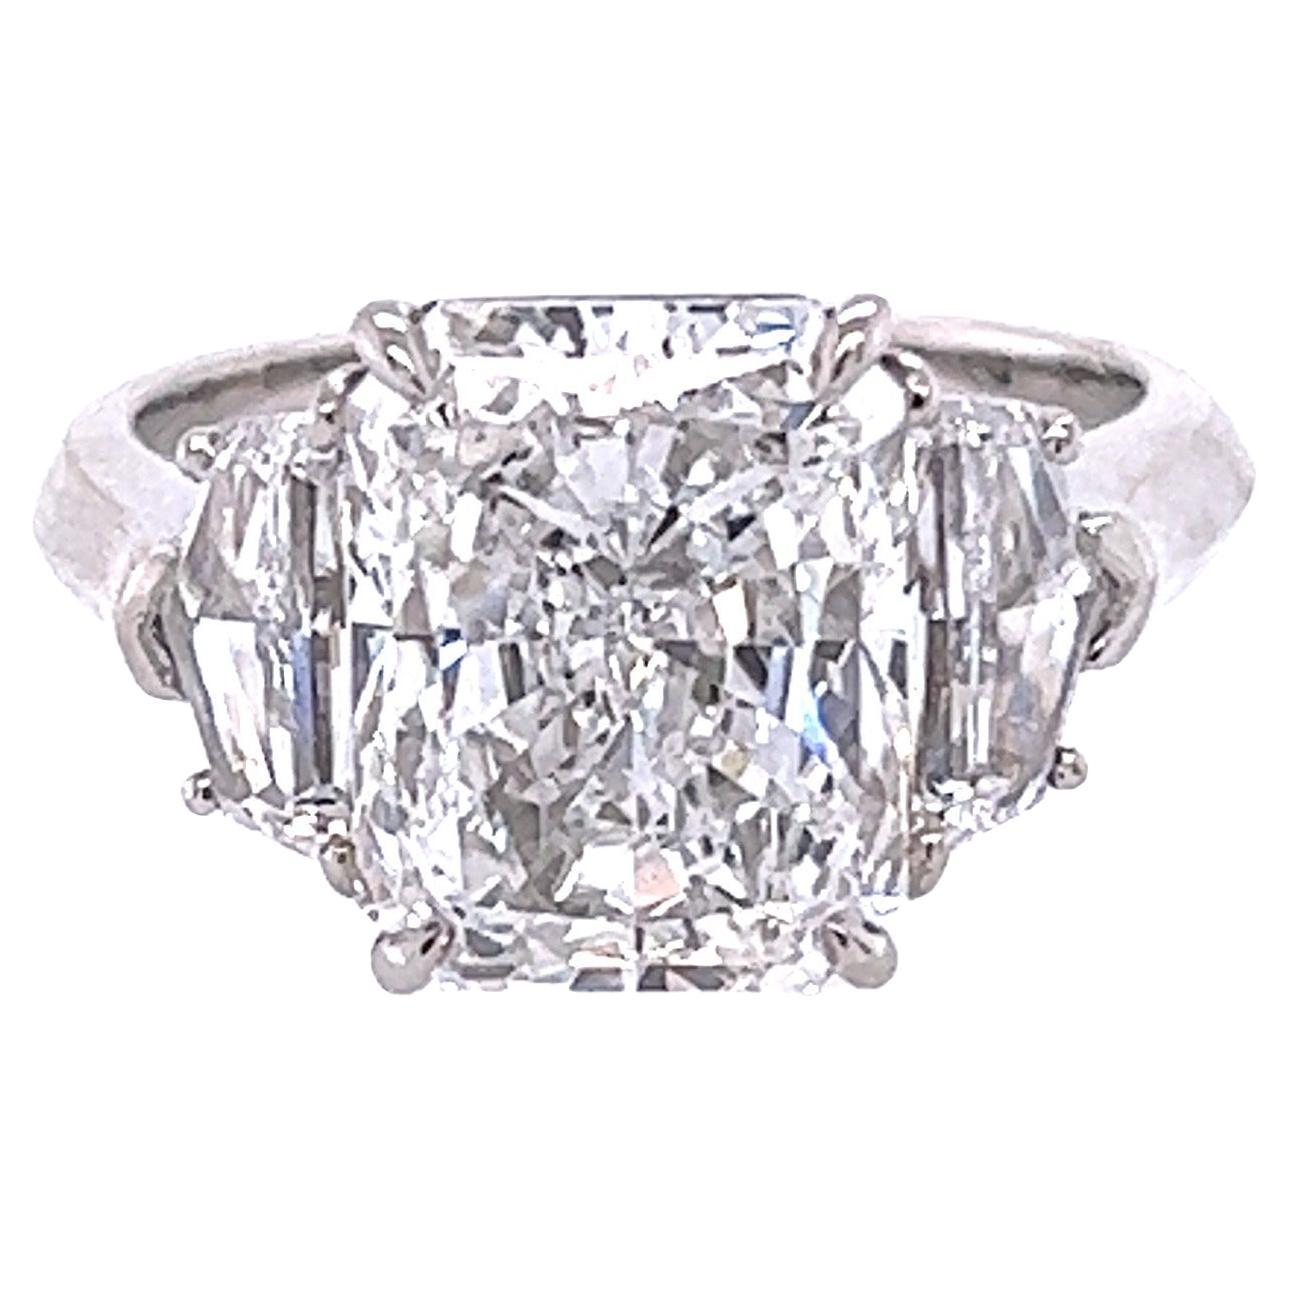 David Rosenberg 5.01 Carat Radiant Cut F SI1 GIA Diamond Engagement Ring